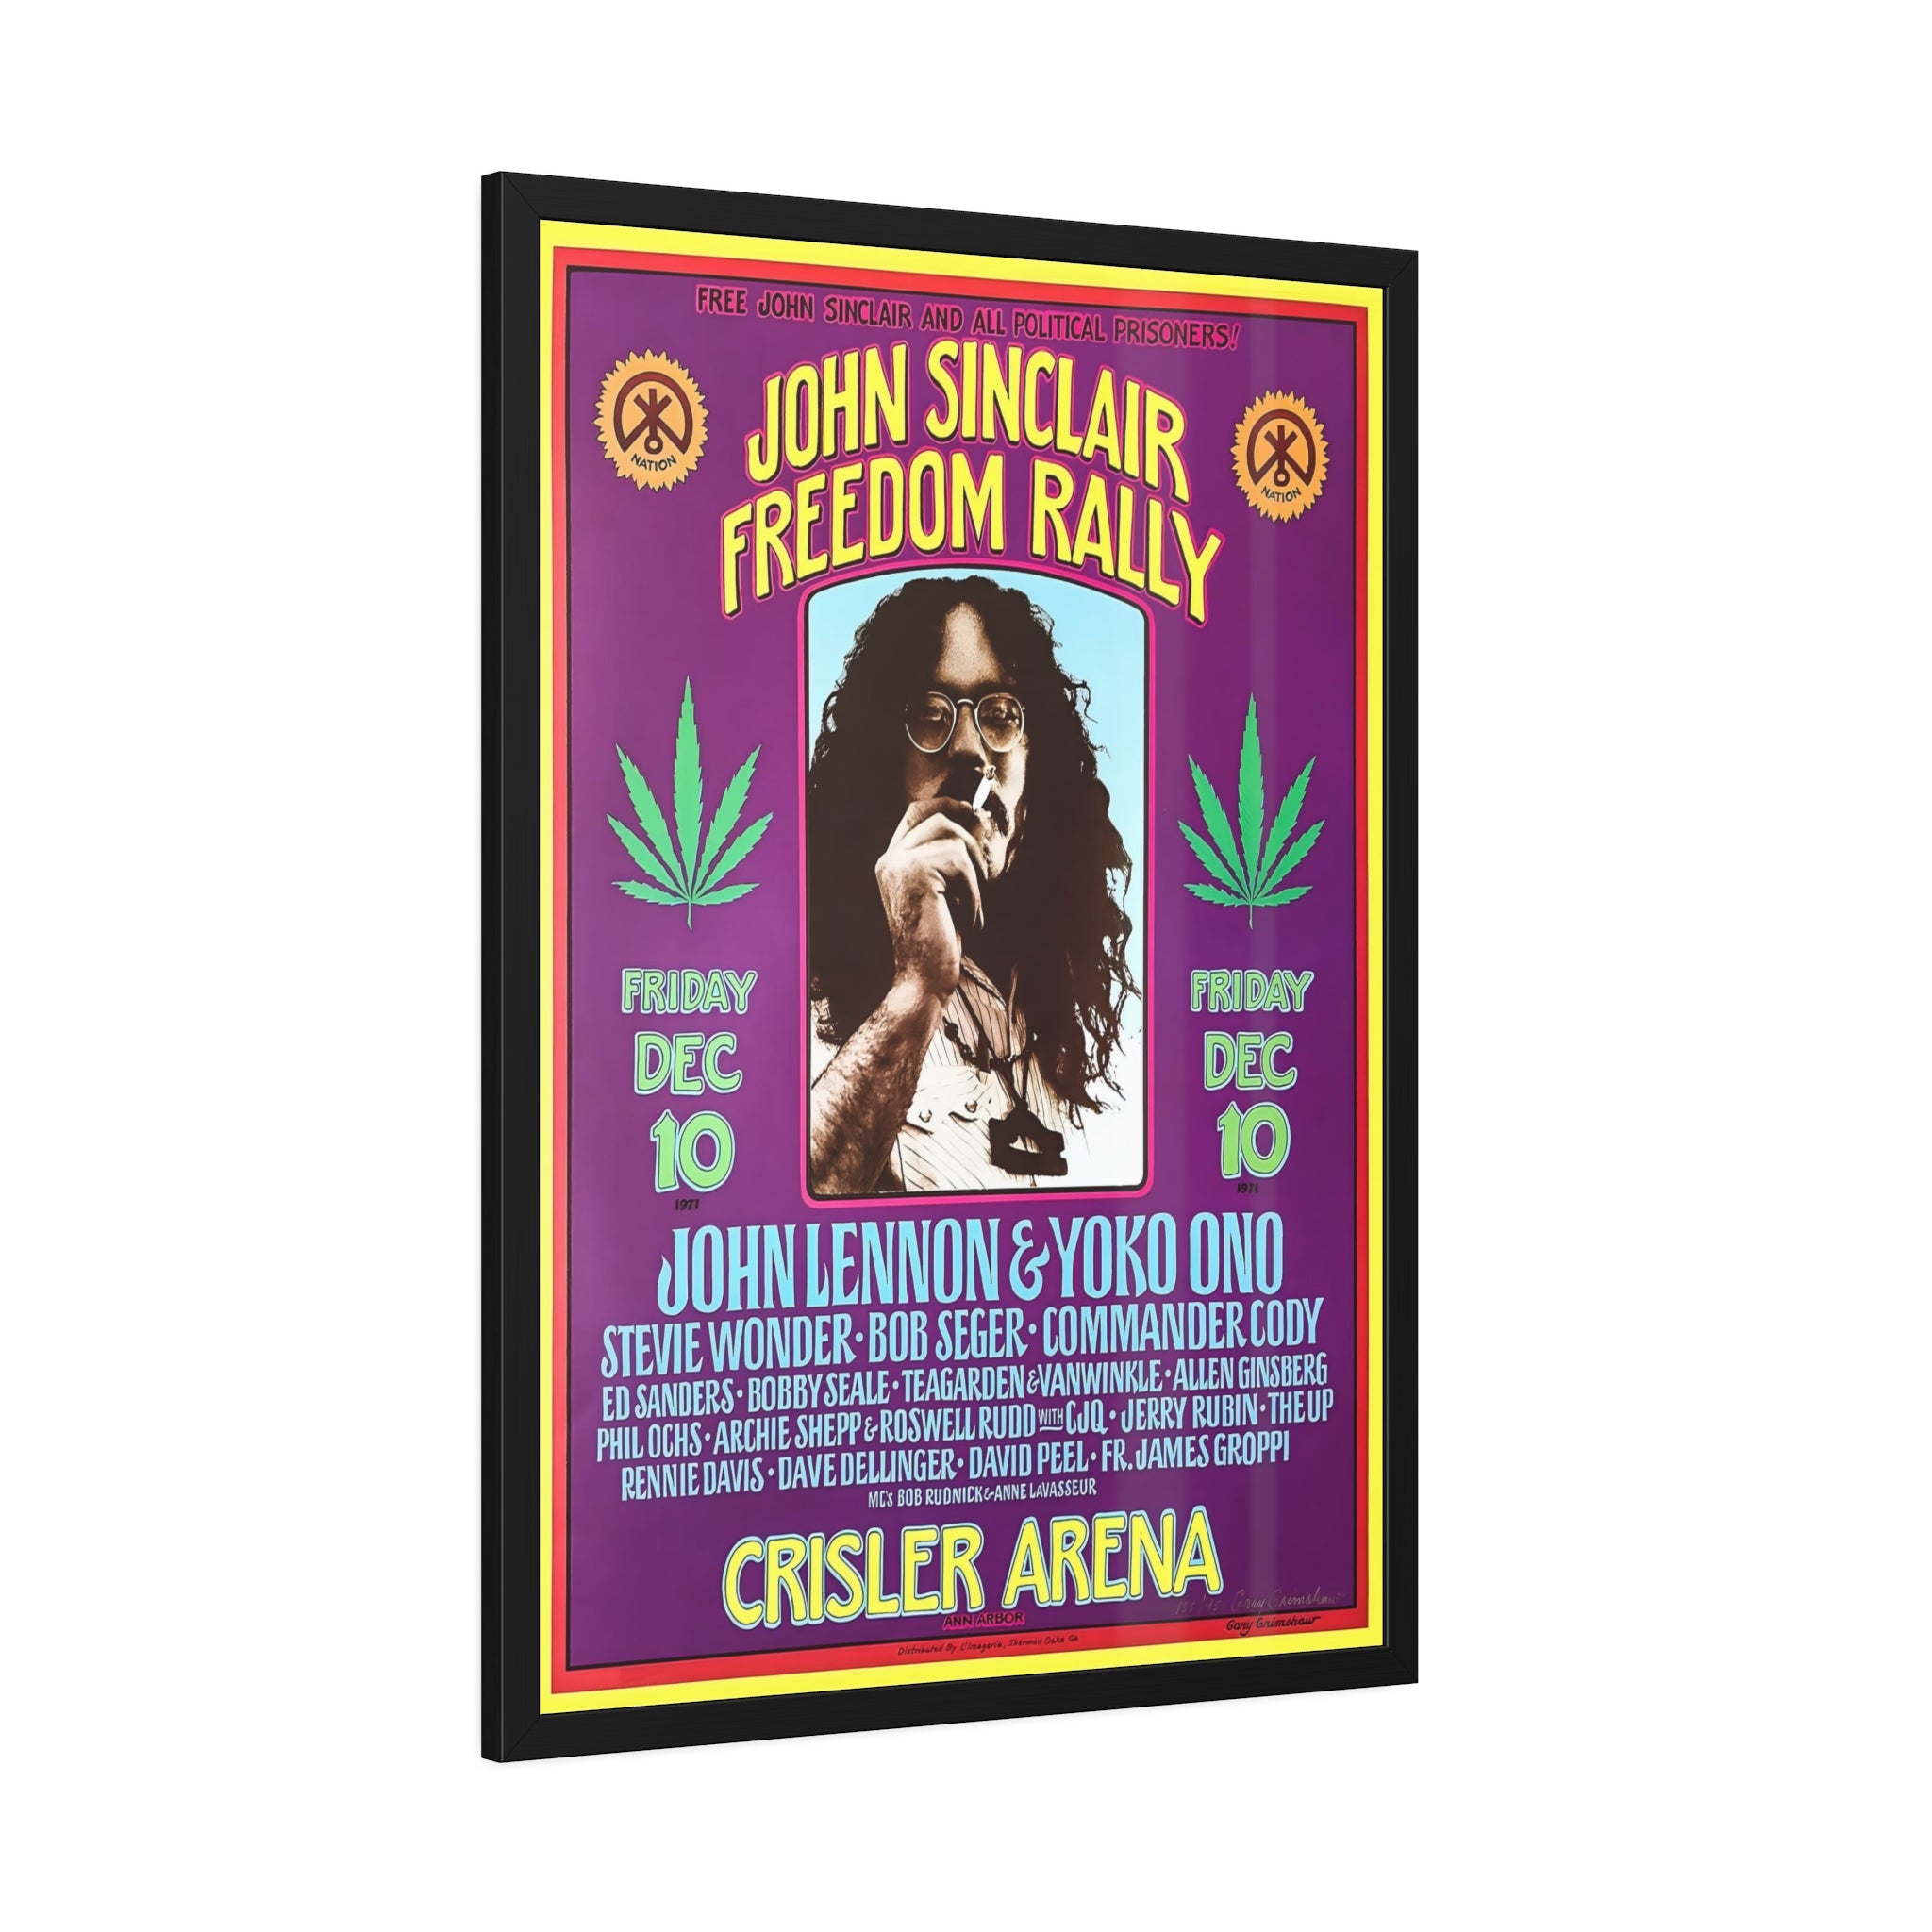 John Sinclair Concert Poster